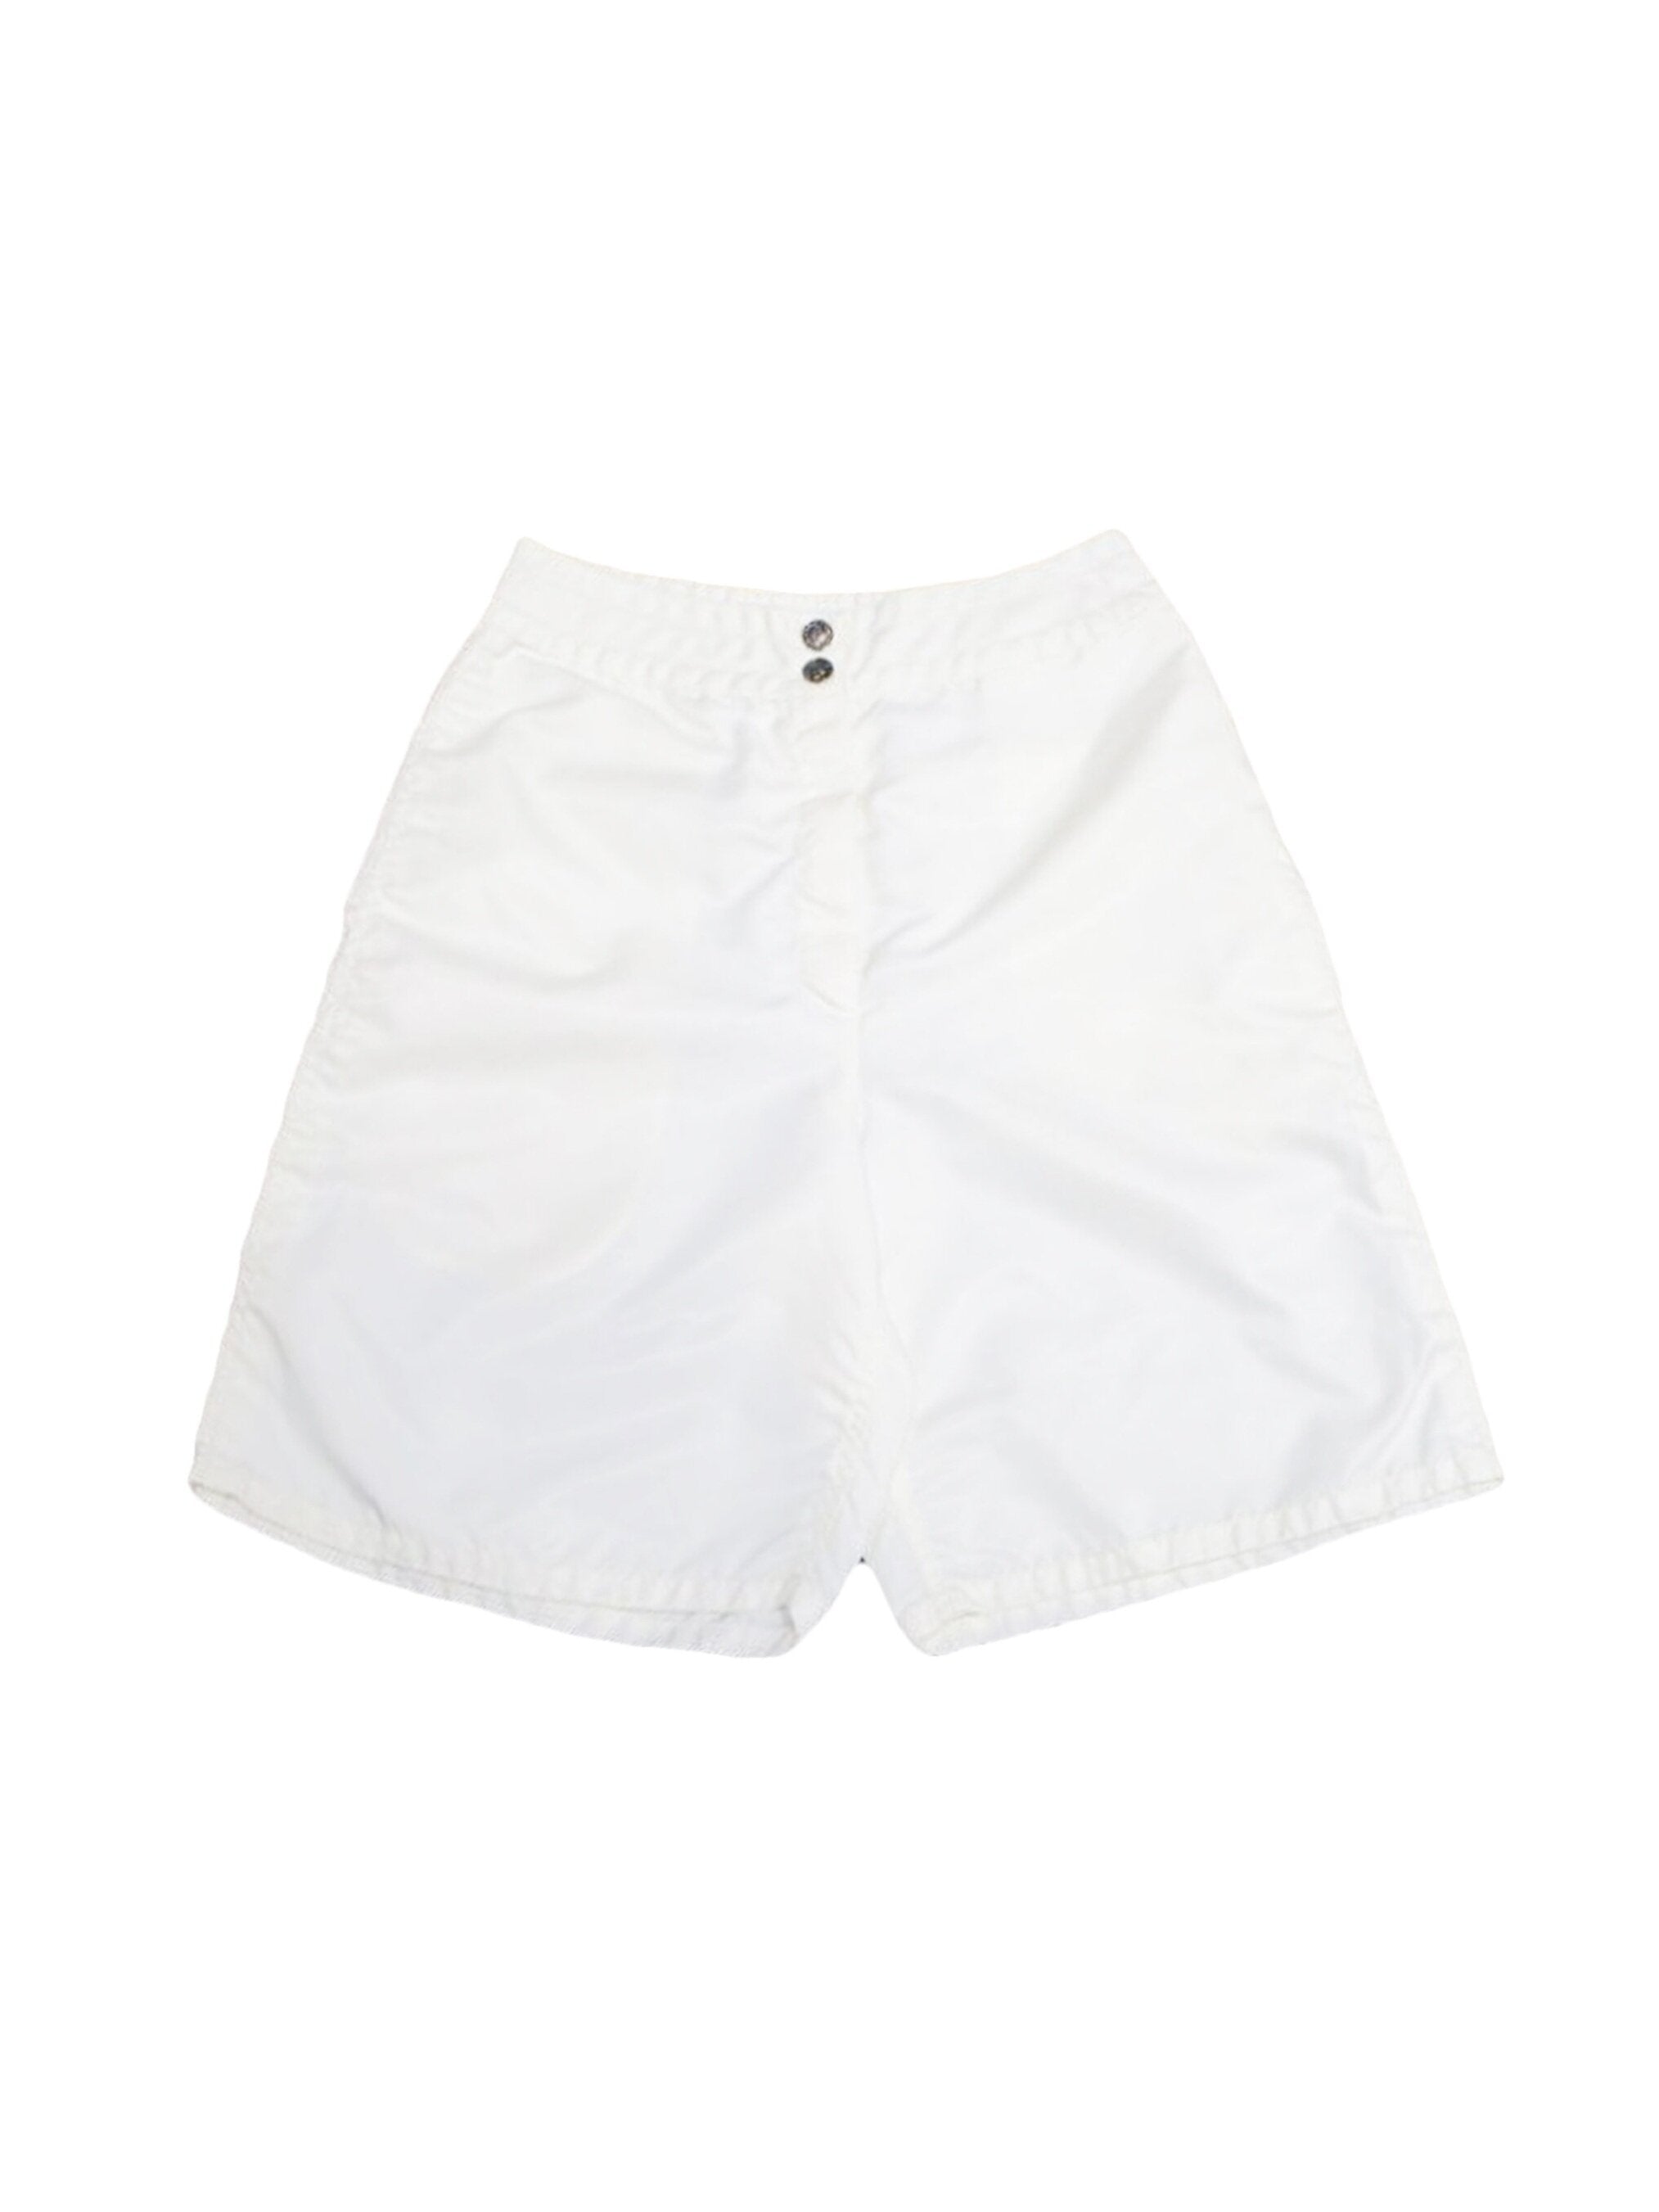 Chanel SS 1996 Rare White Cotton Shorts